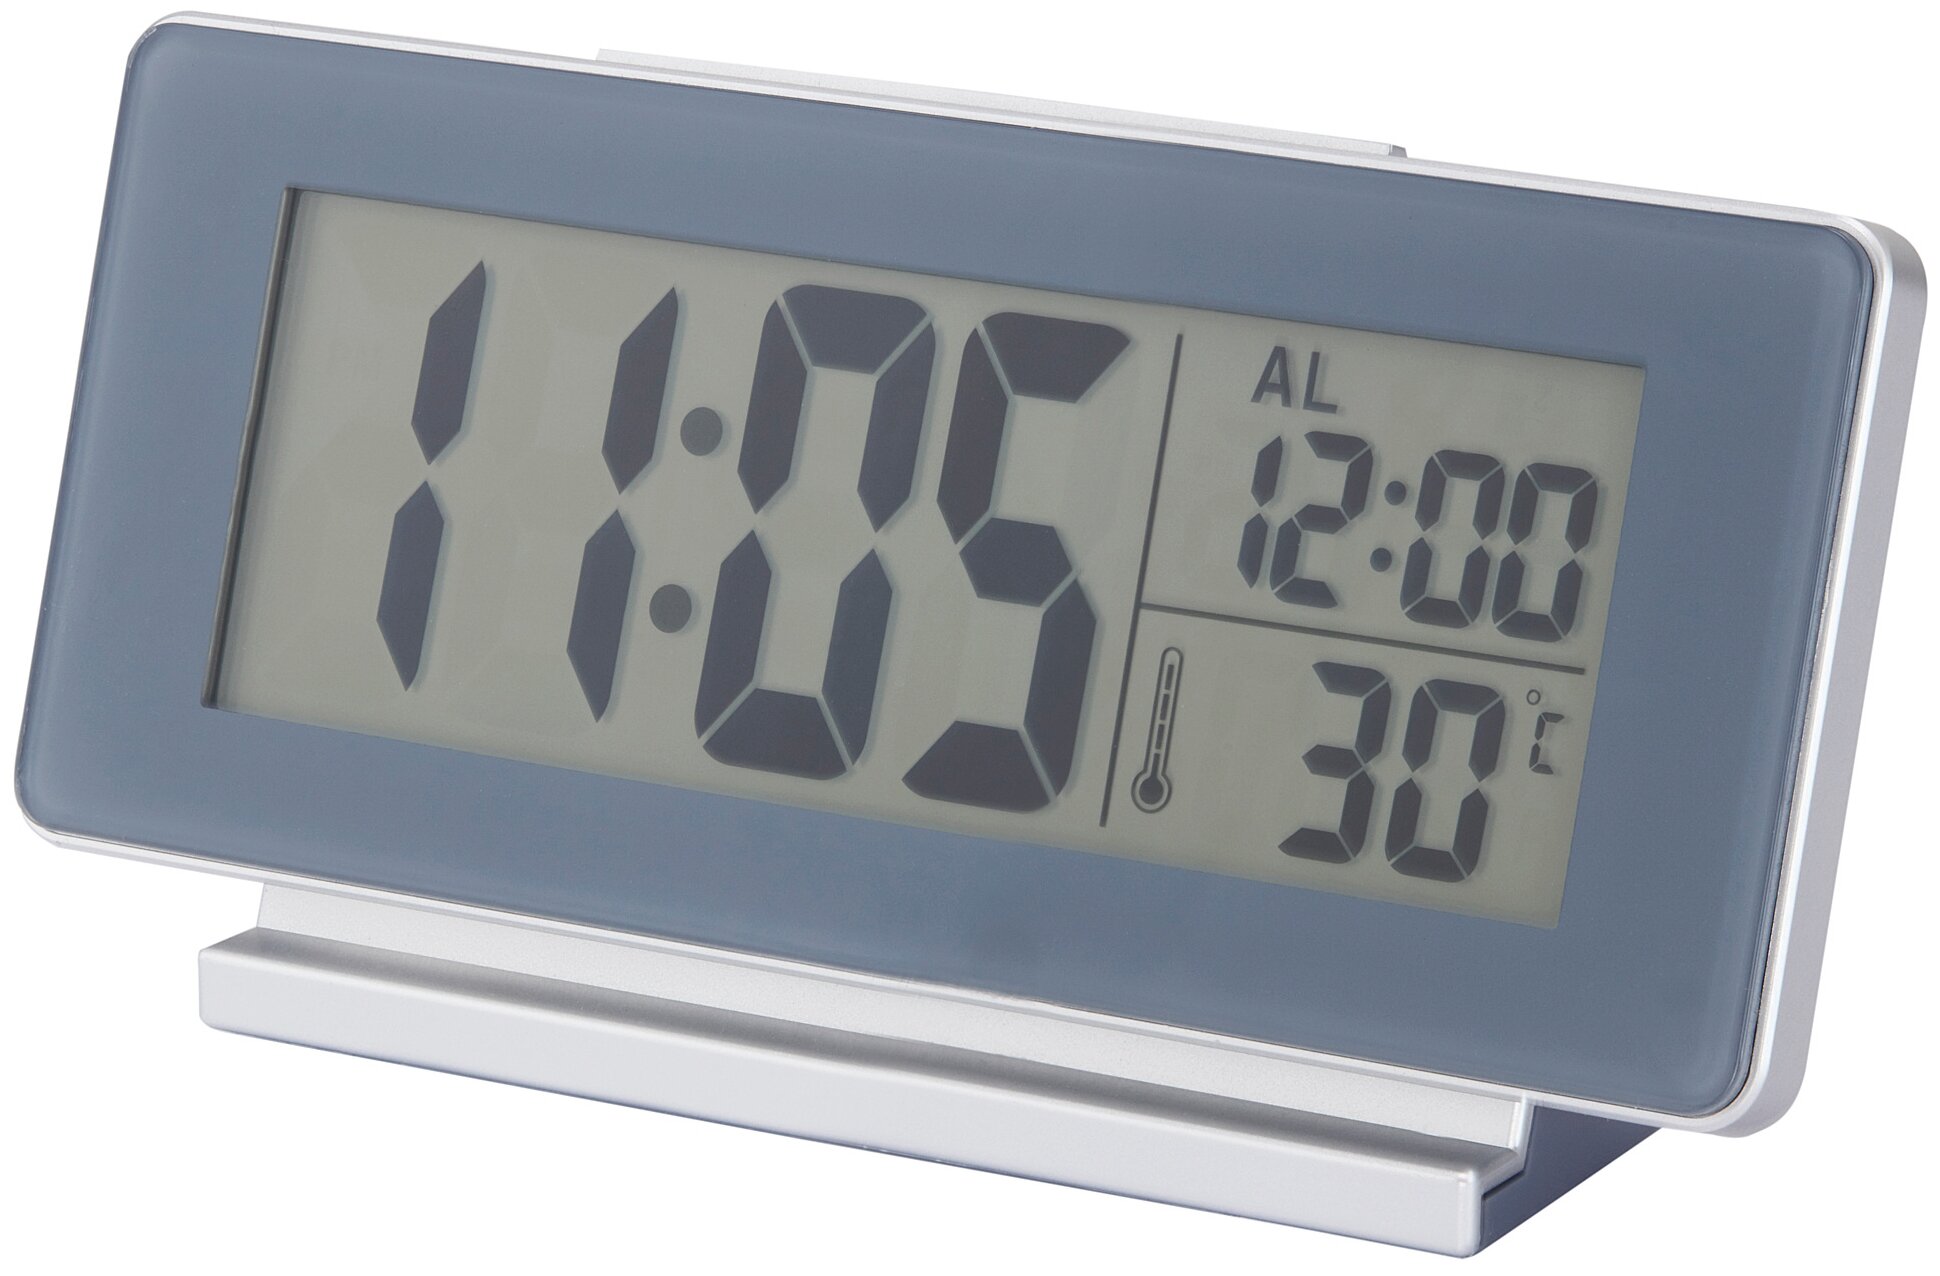 Часы с термометром ИКЕА часы/термометр/будильник ФИЛЬМИС, серый